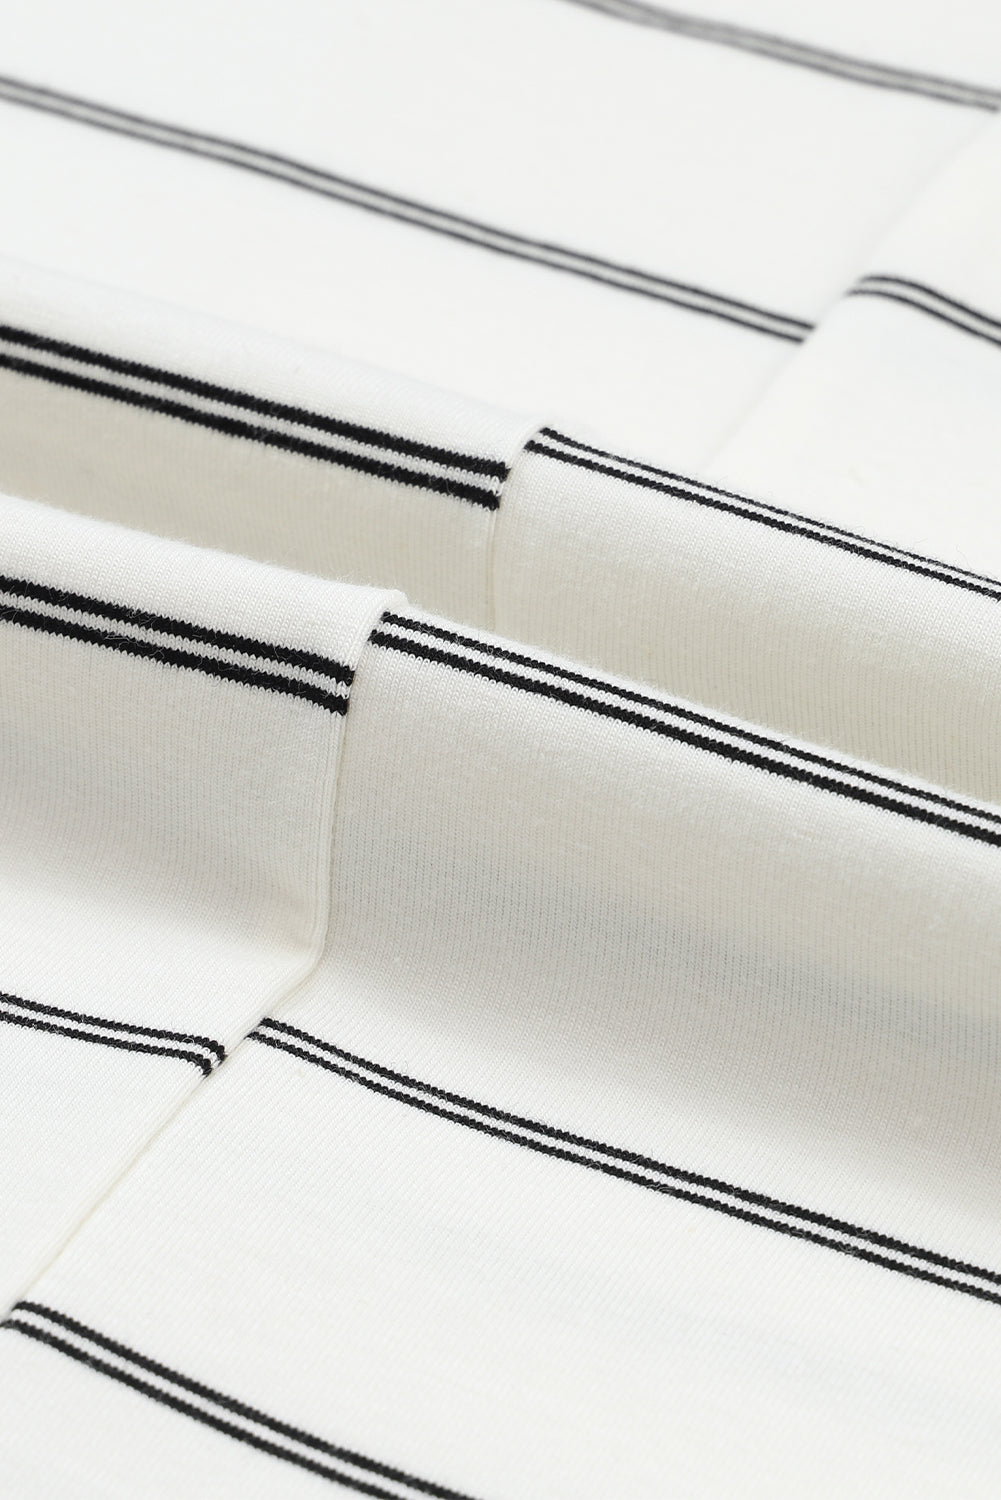 Stripe Patchwork High Low Side Slits Long Sleeve Top